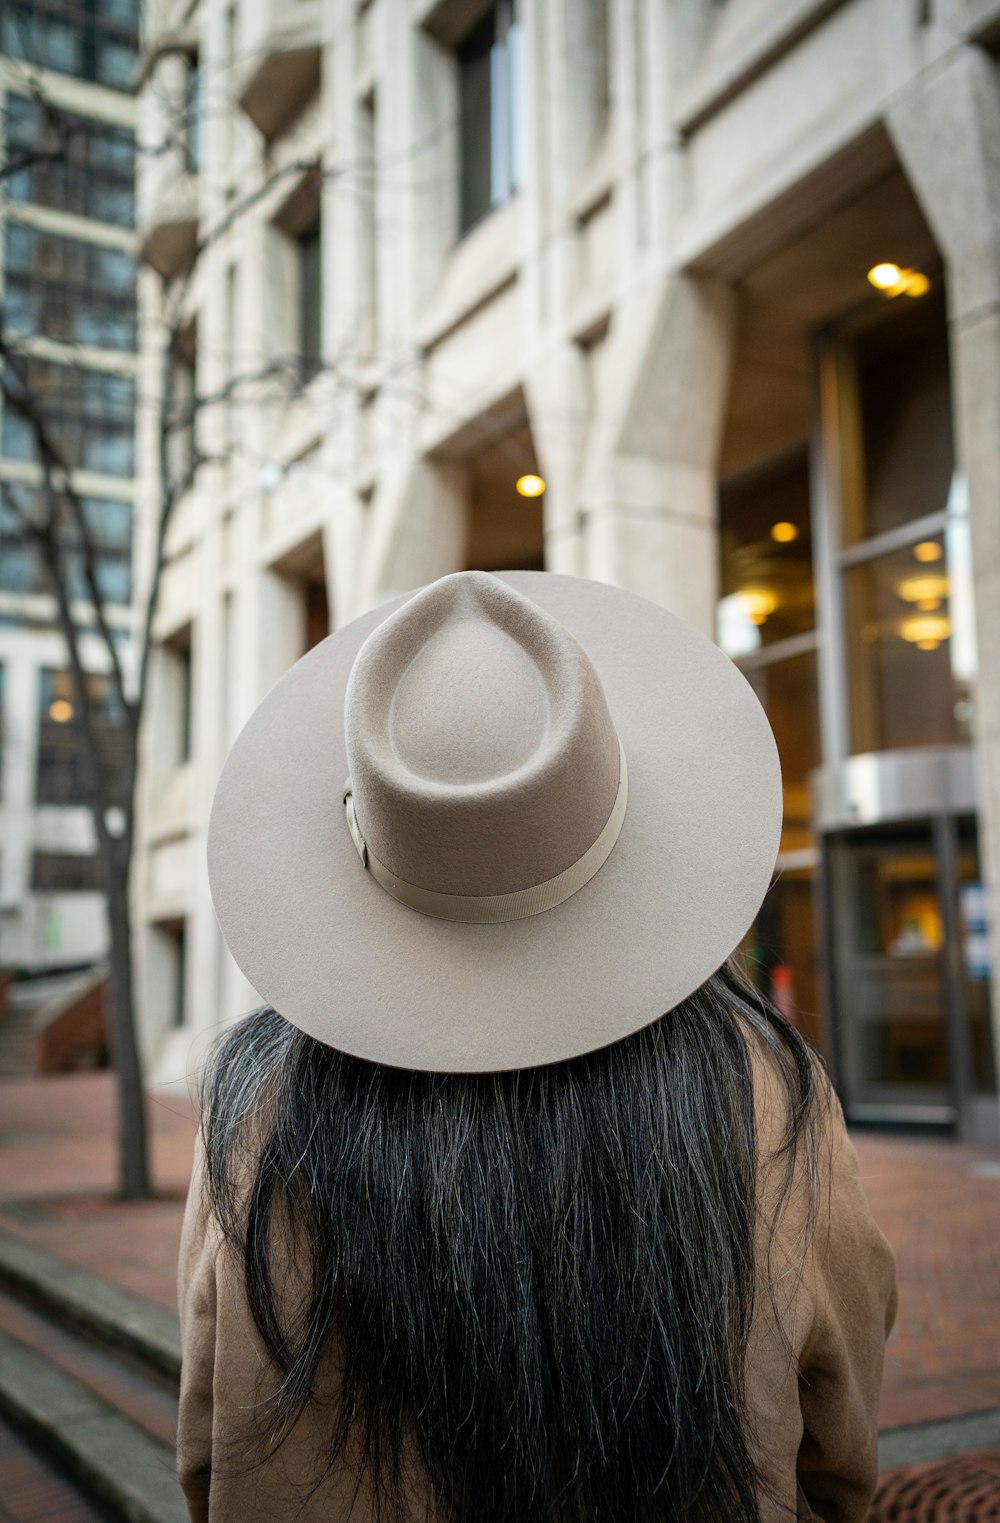 a person wearing a hat walking down a street